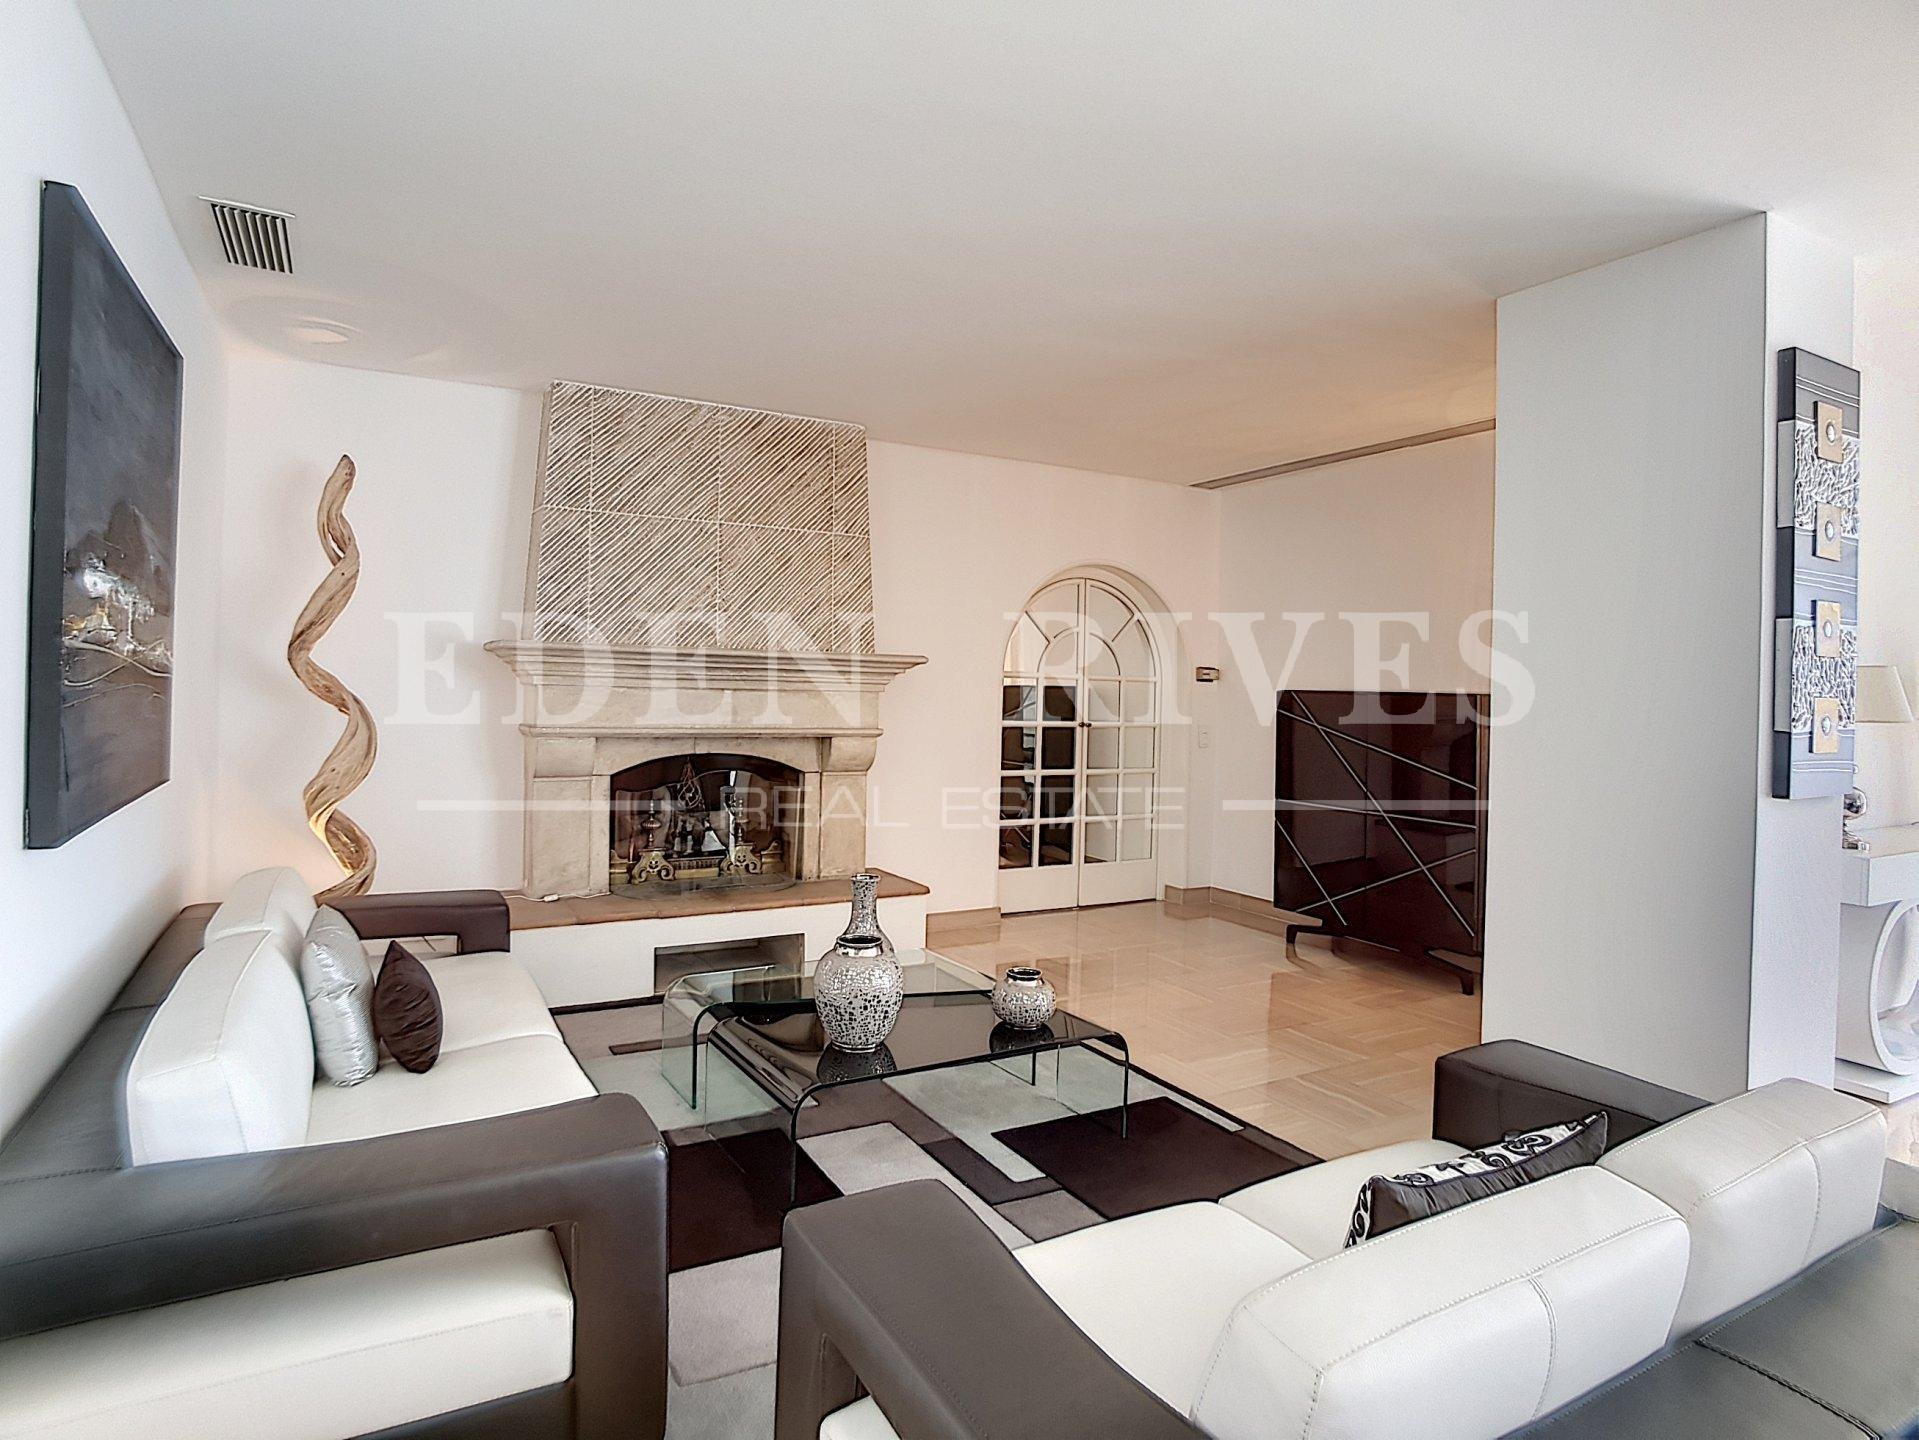 Living-room Fireplace Tile